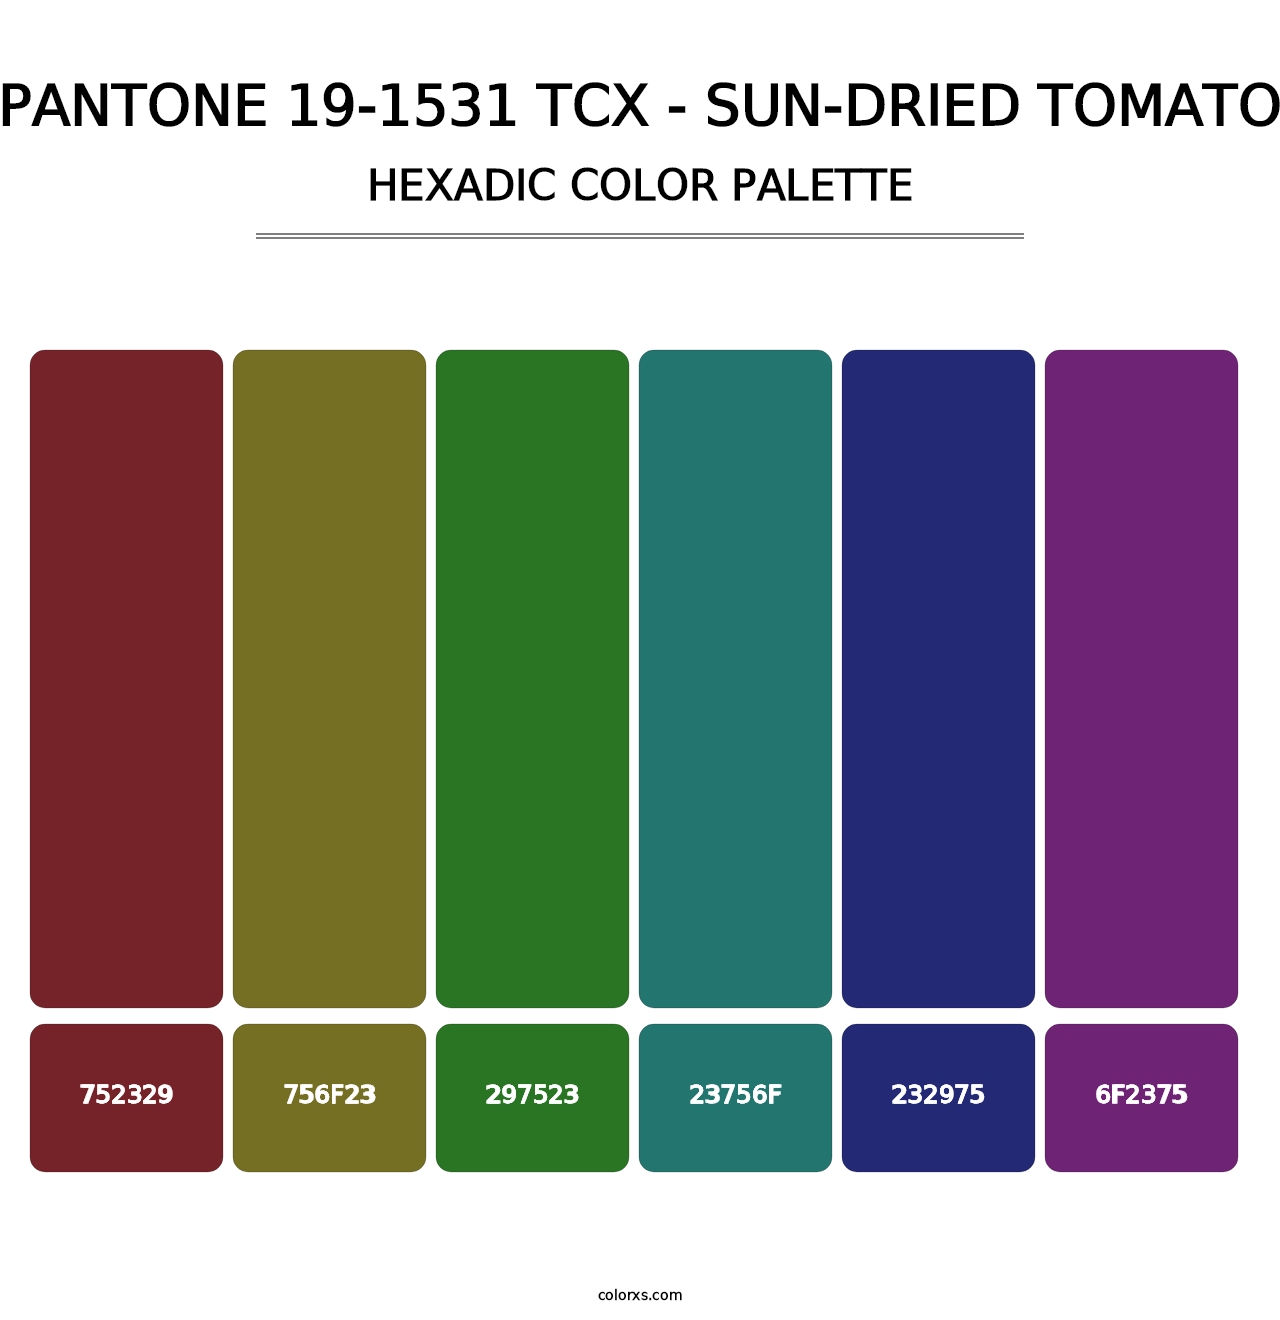 PANTONE 19-1531 TCX - Sun-Dried Tomato - Hexadic Color Palette